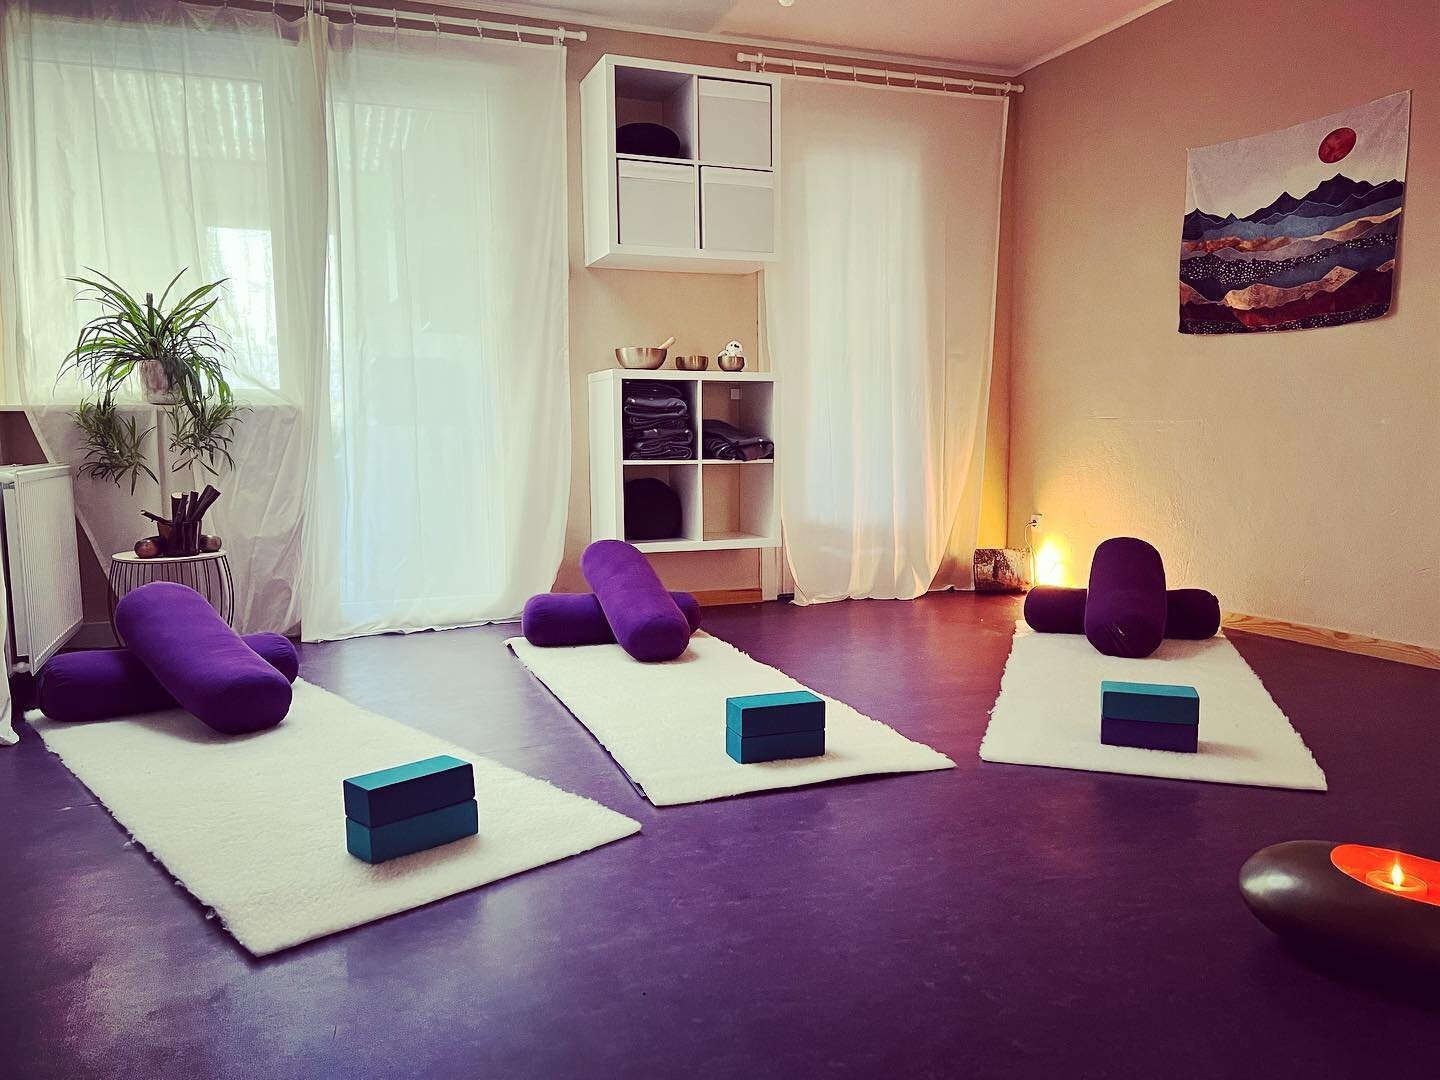 Ready to relax? 

#restorativeyoga #relax #restore #refresh #yoga #antwerpen